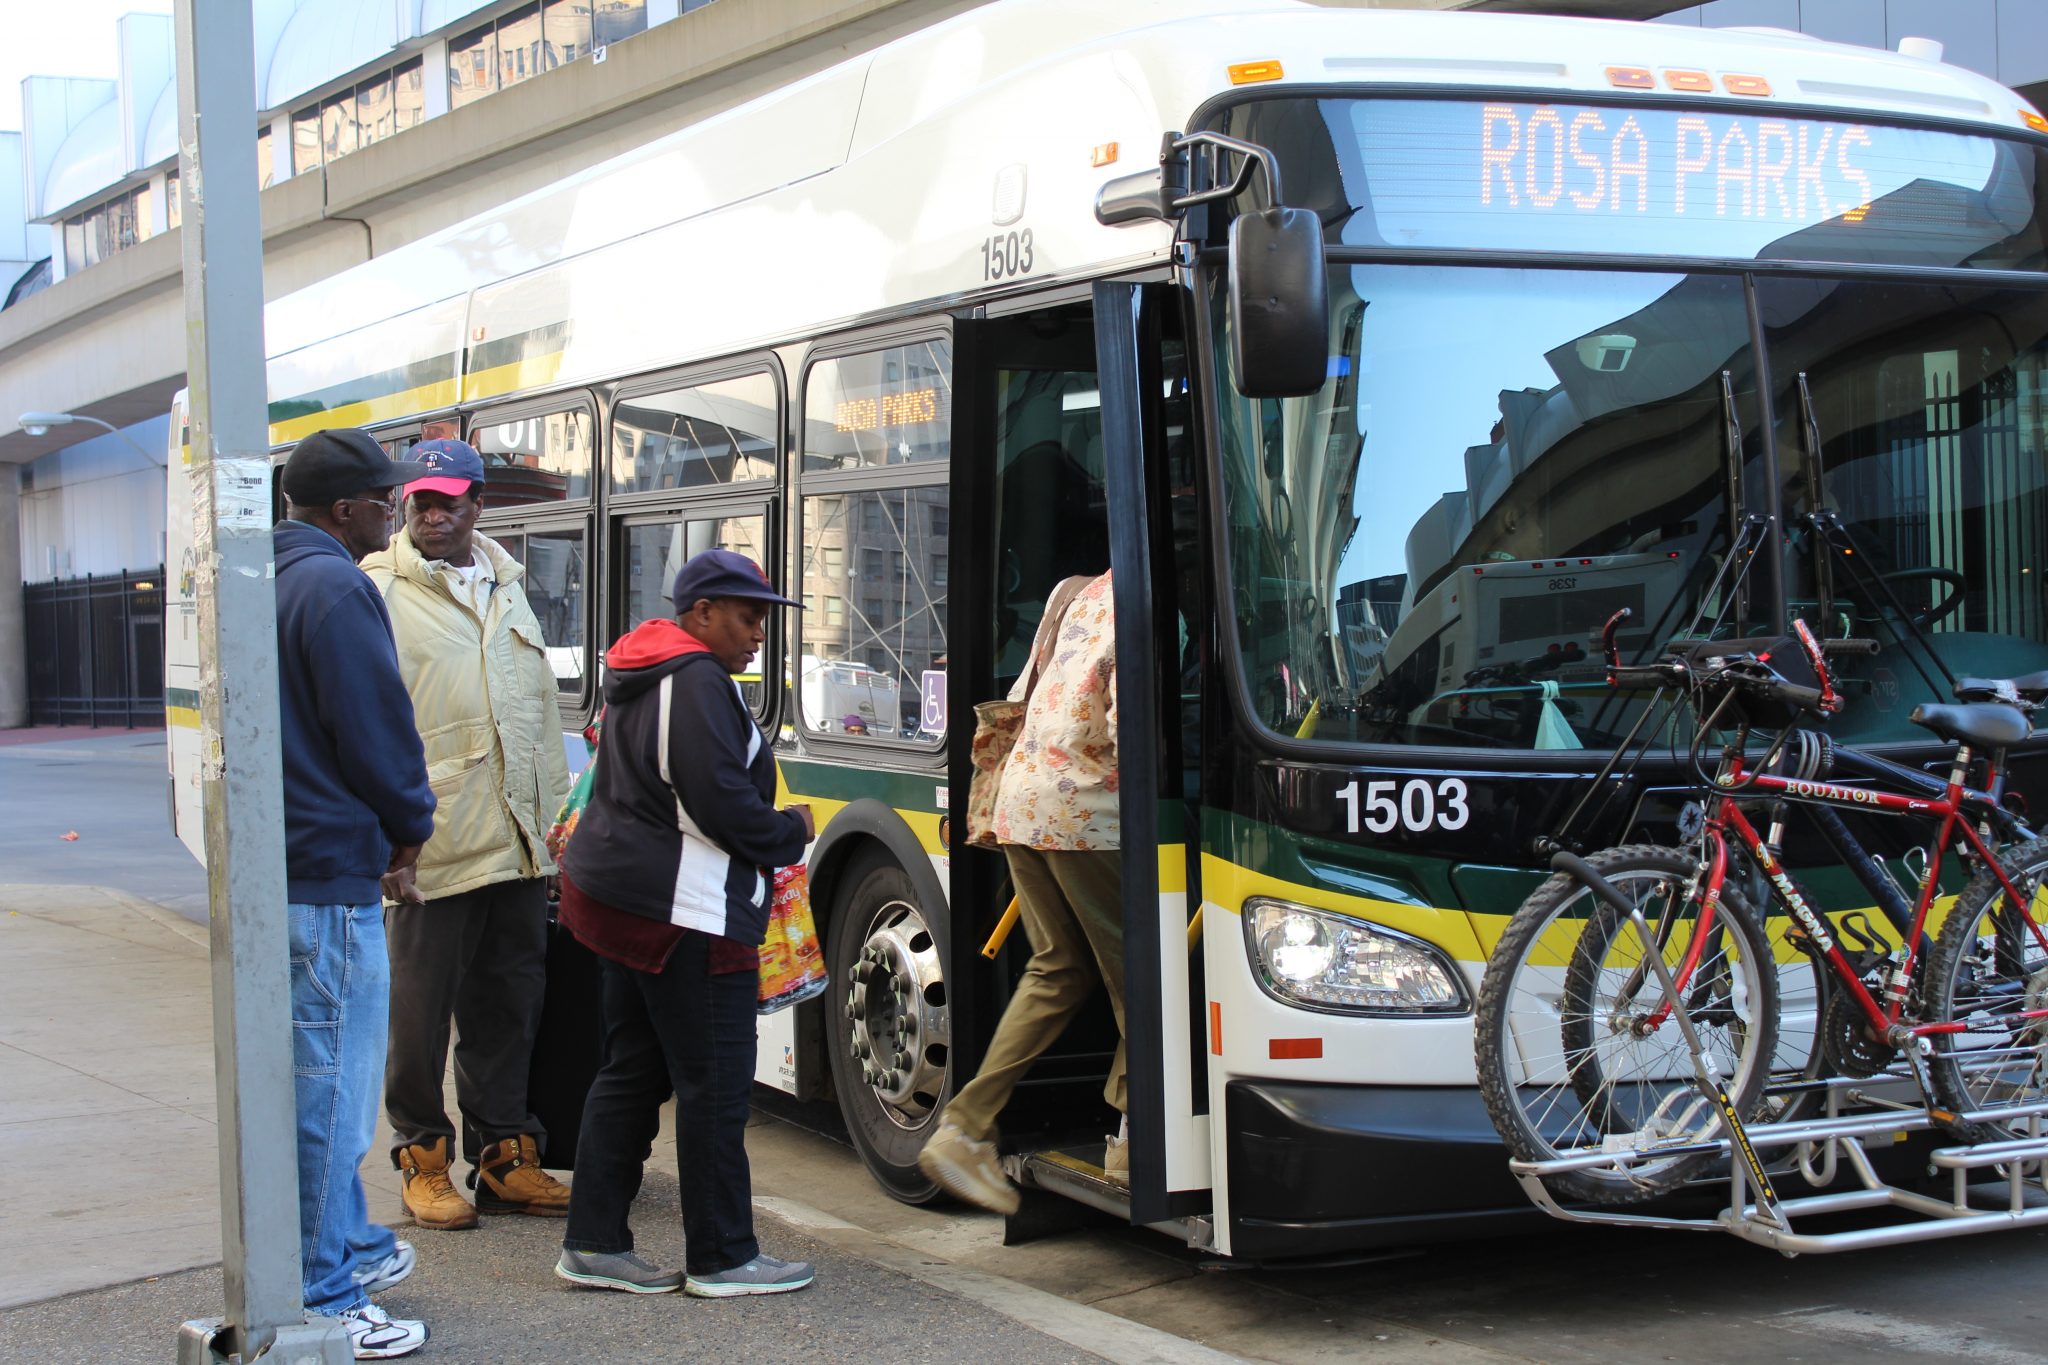 Riders boarding a DDOT bus in Detroit, Michigan.